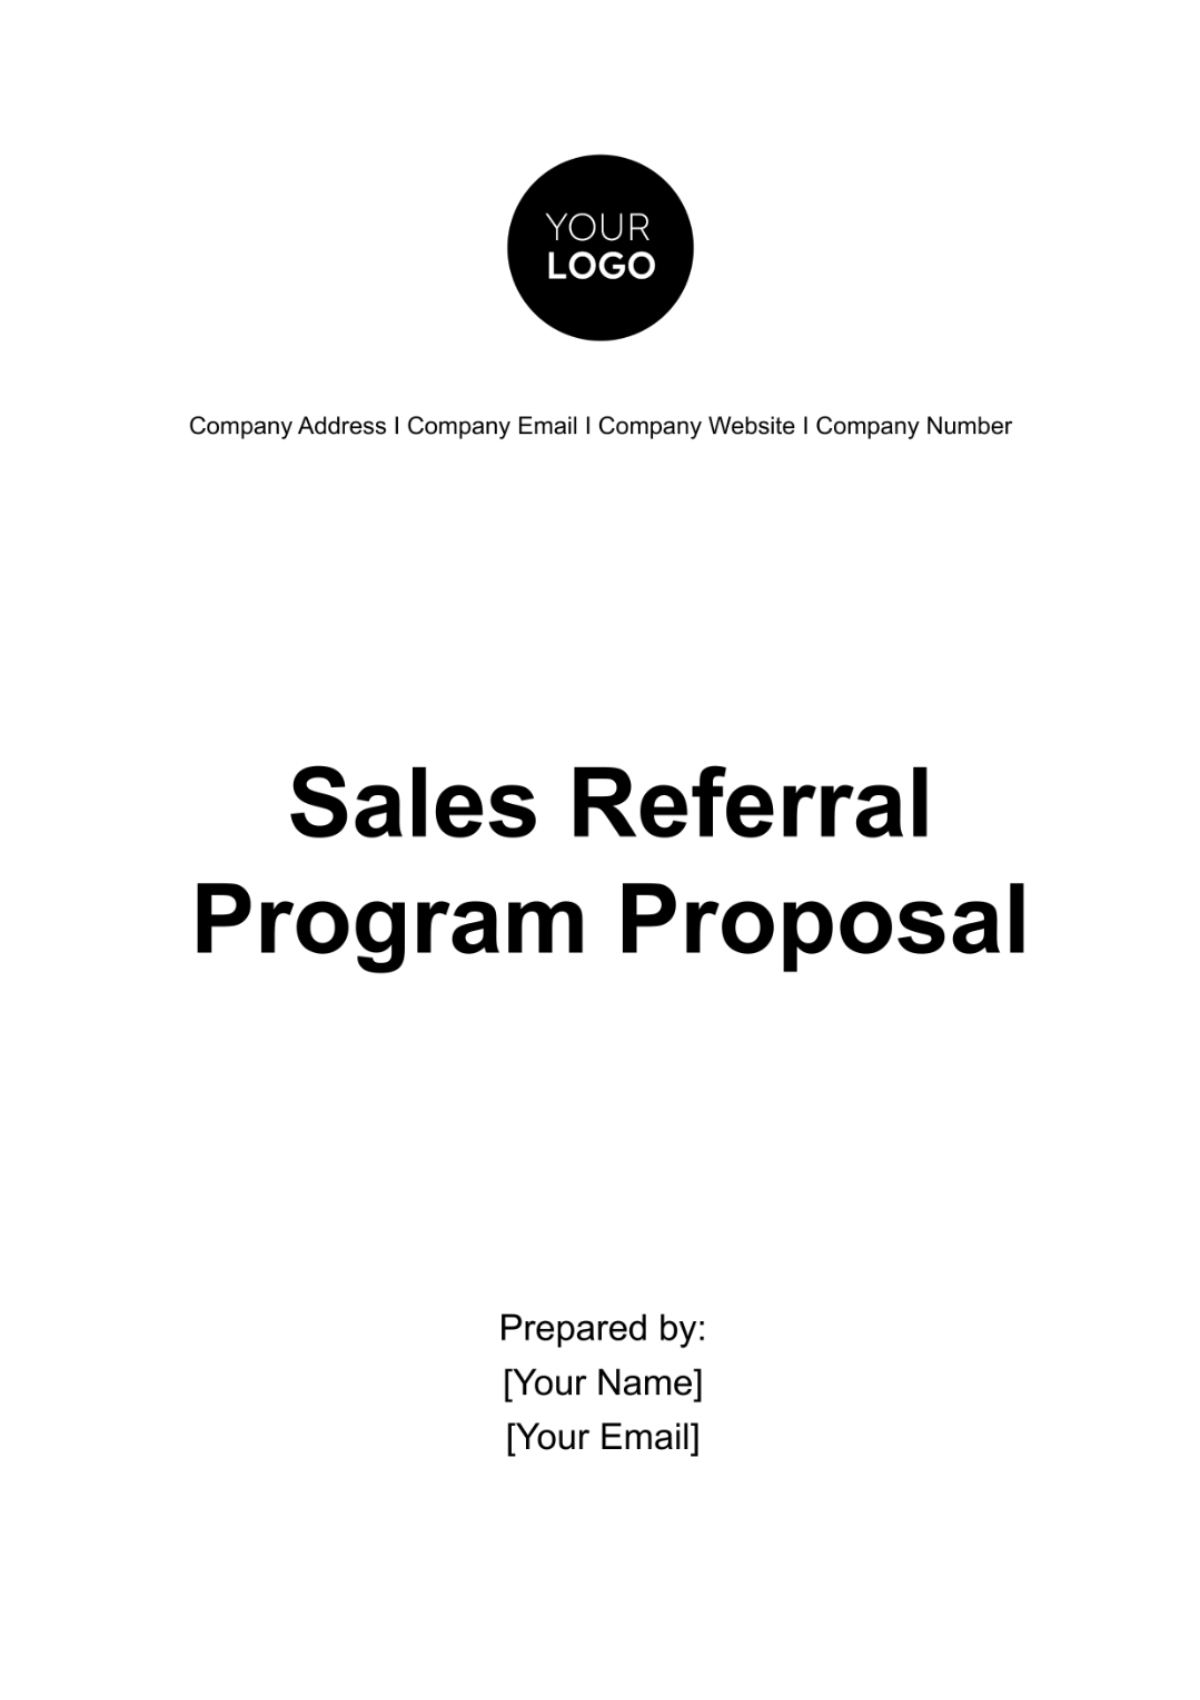 Sales Referral Program Proposal Template